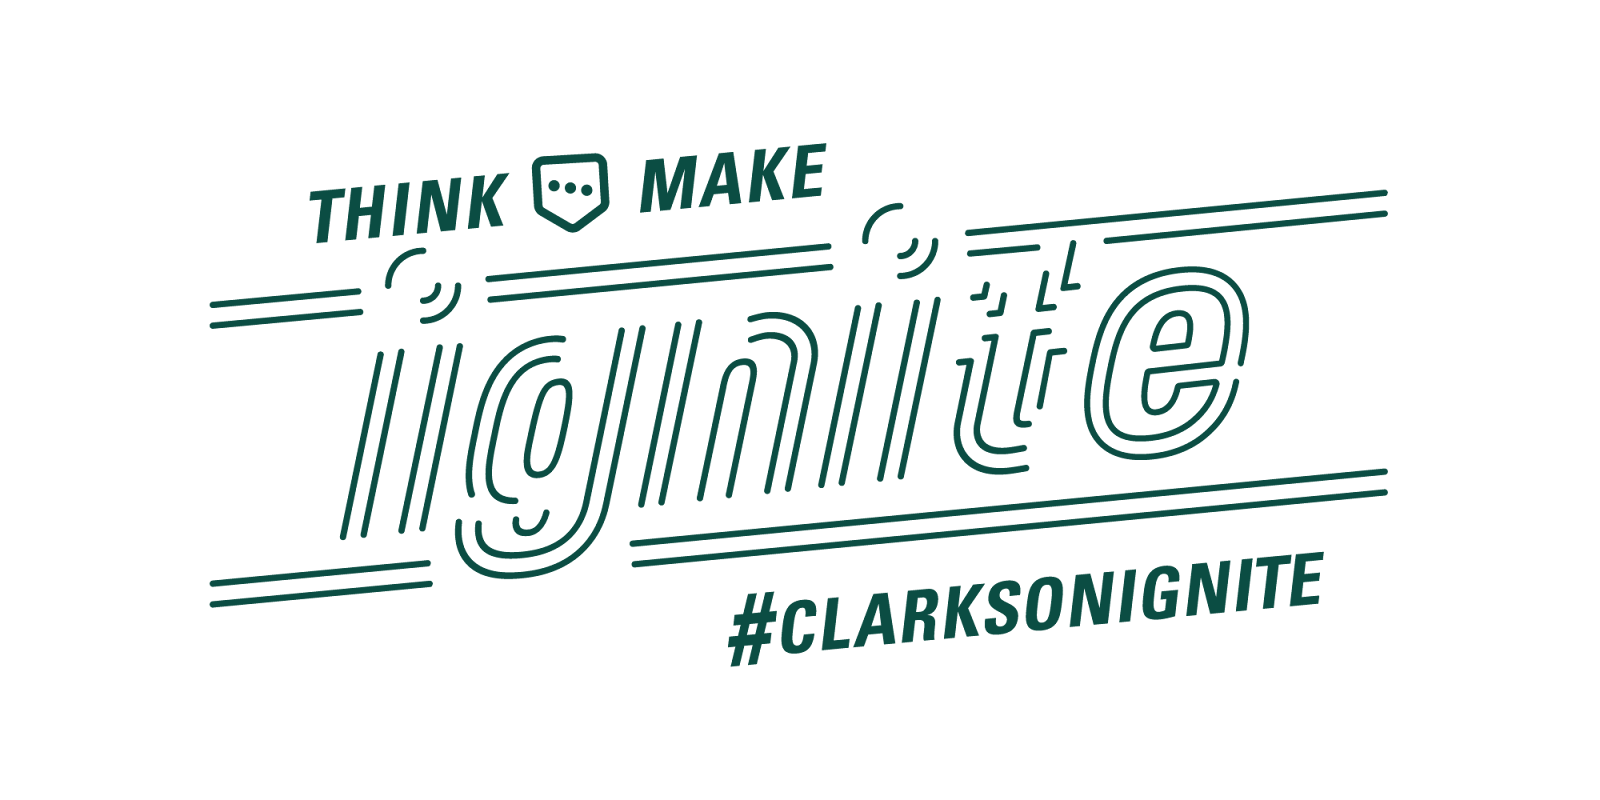 Think Make Ignite #clarksonignite